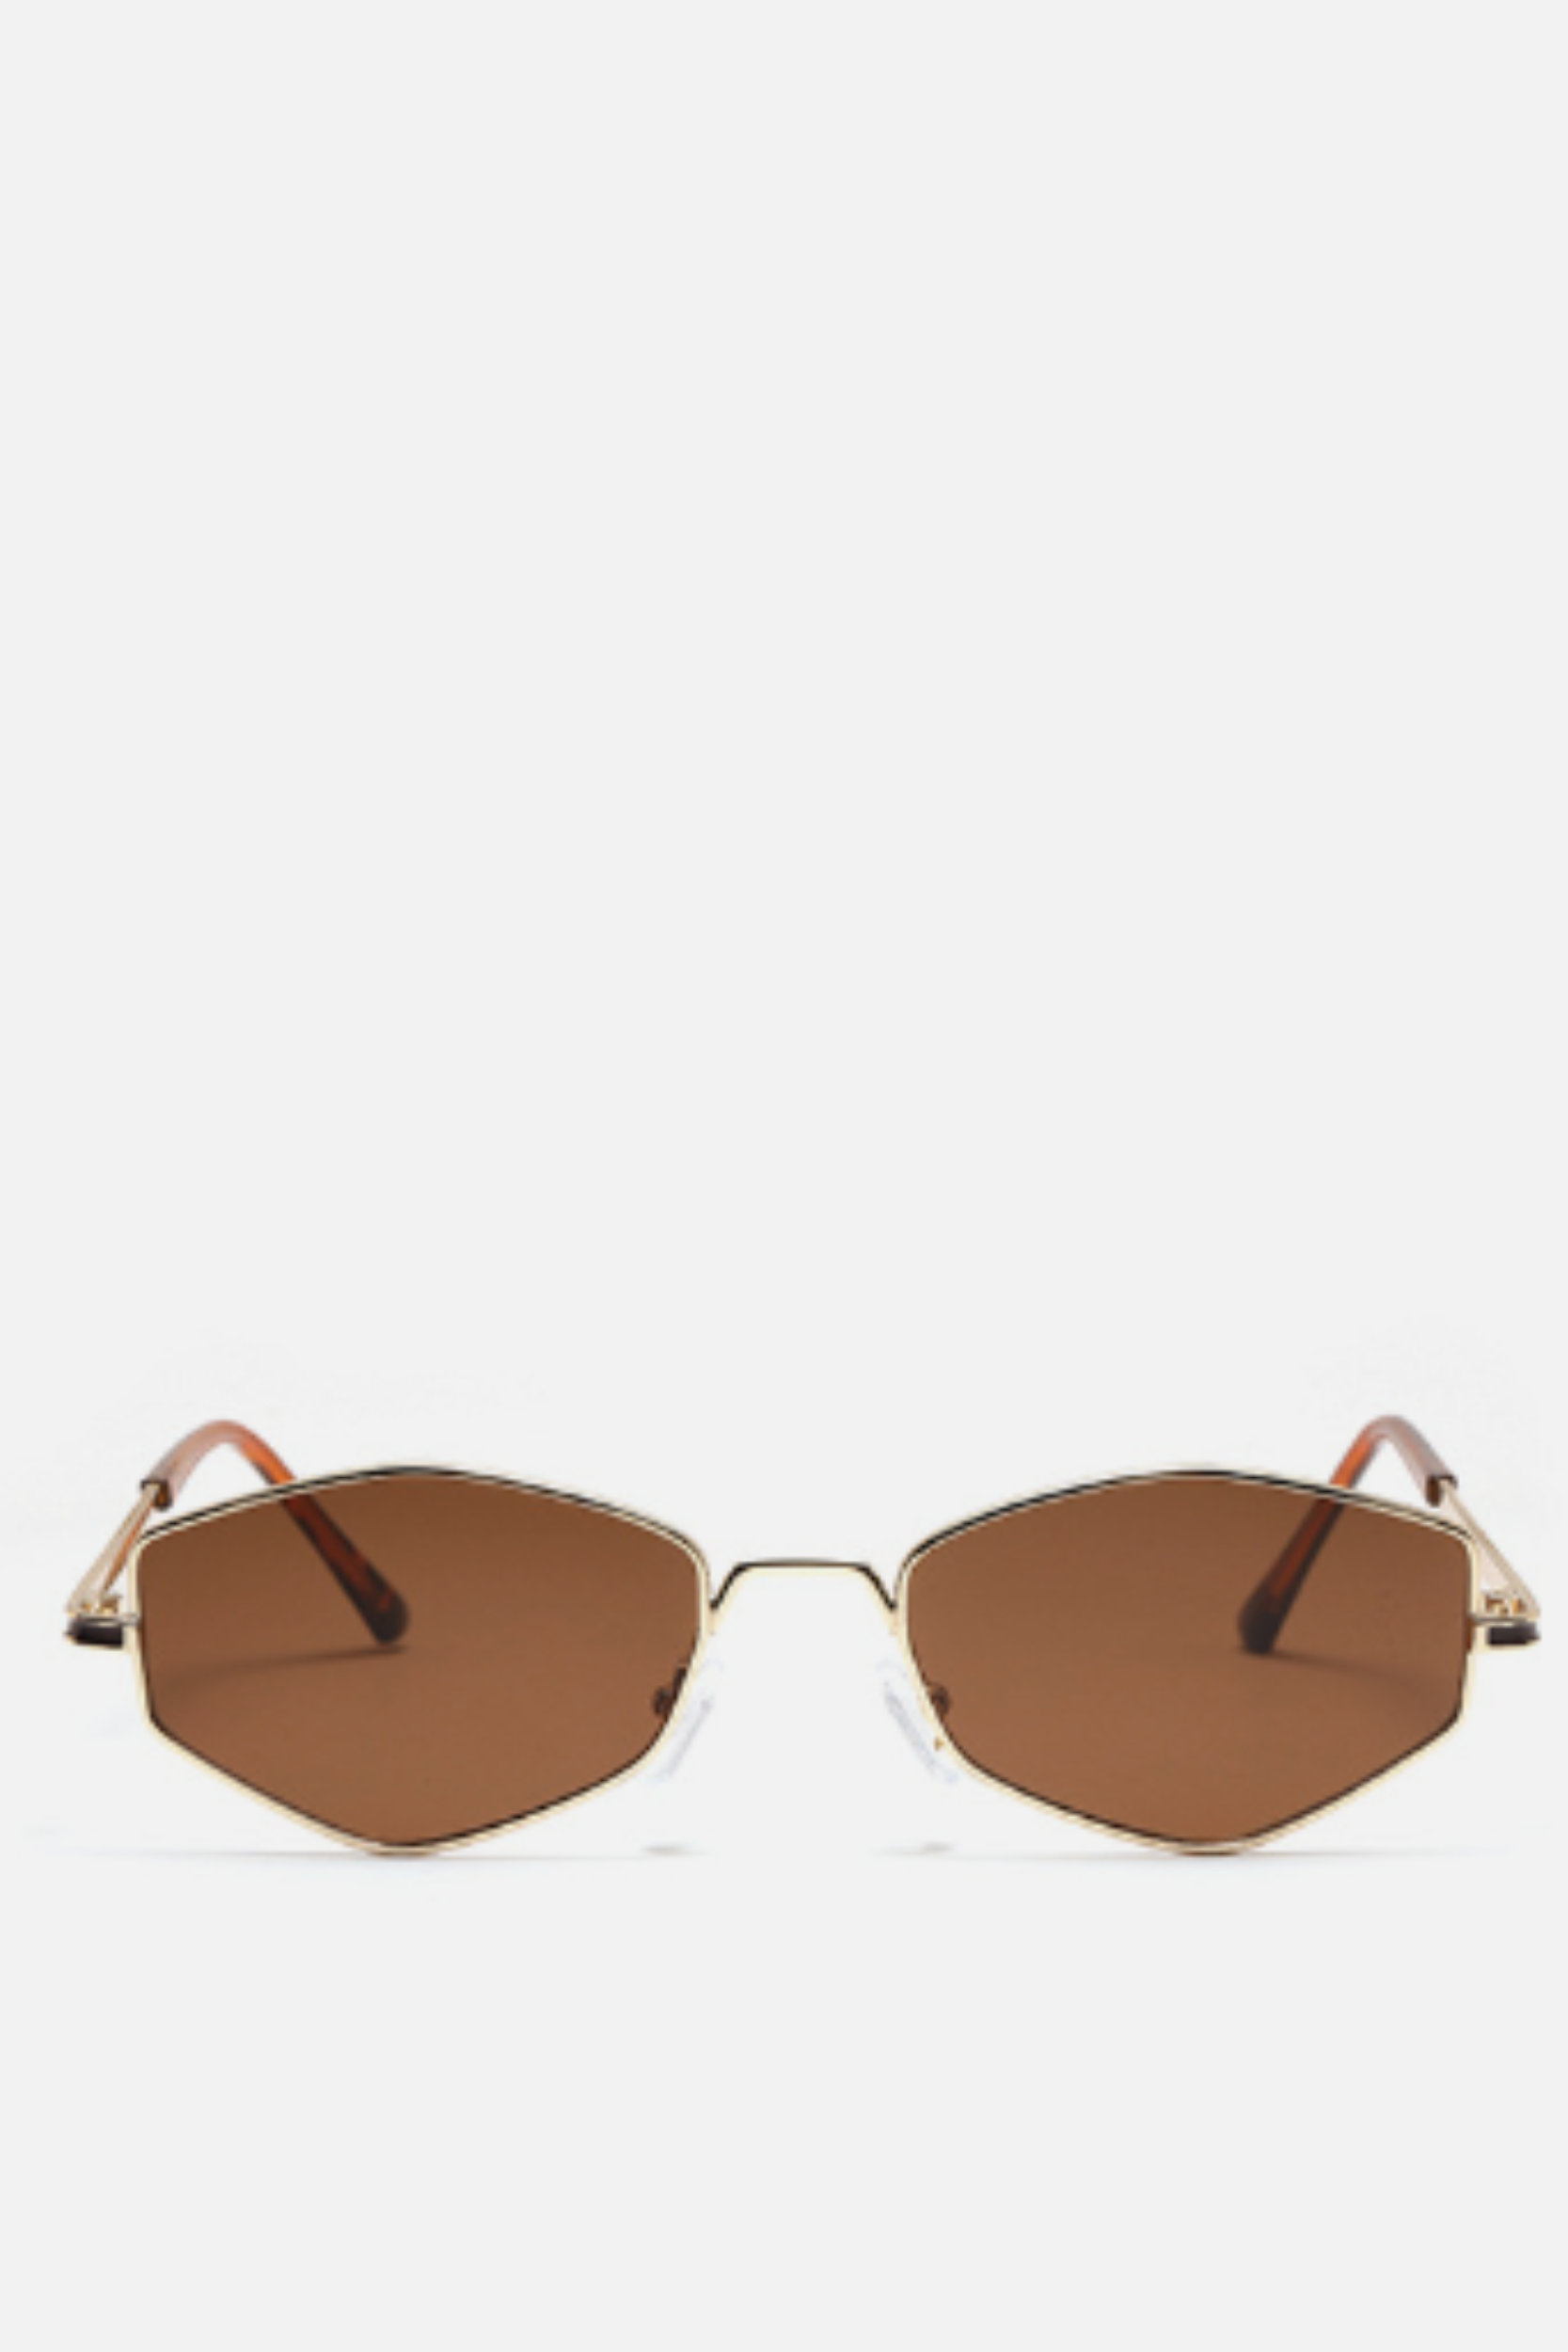 CAIRO Brown Small Sunglasses